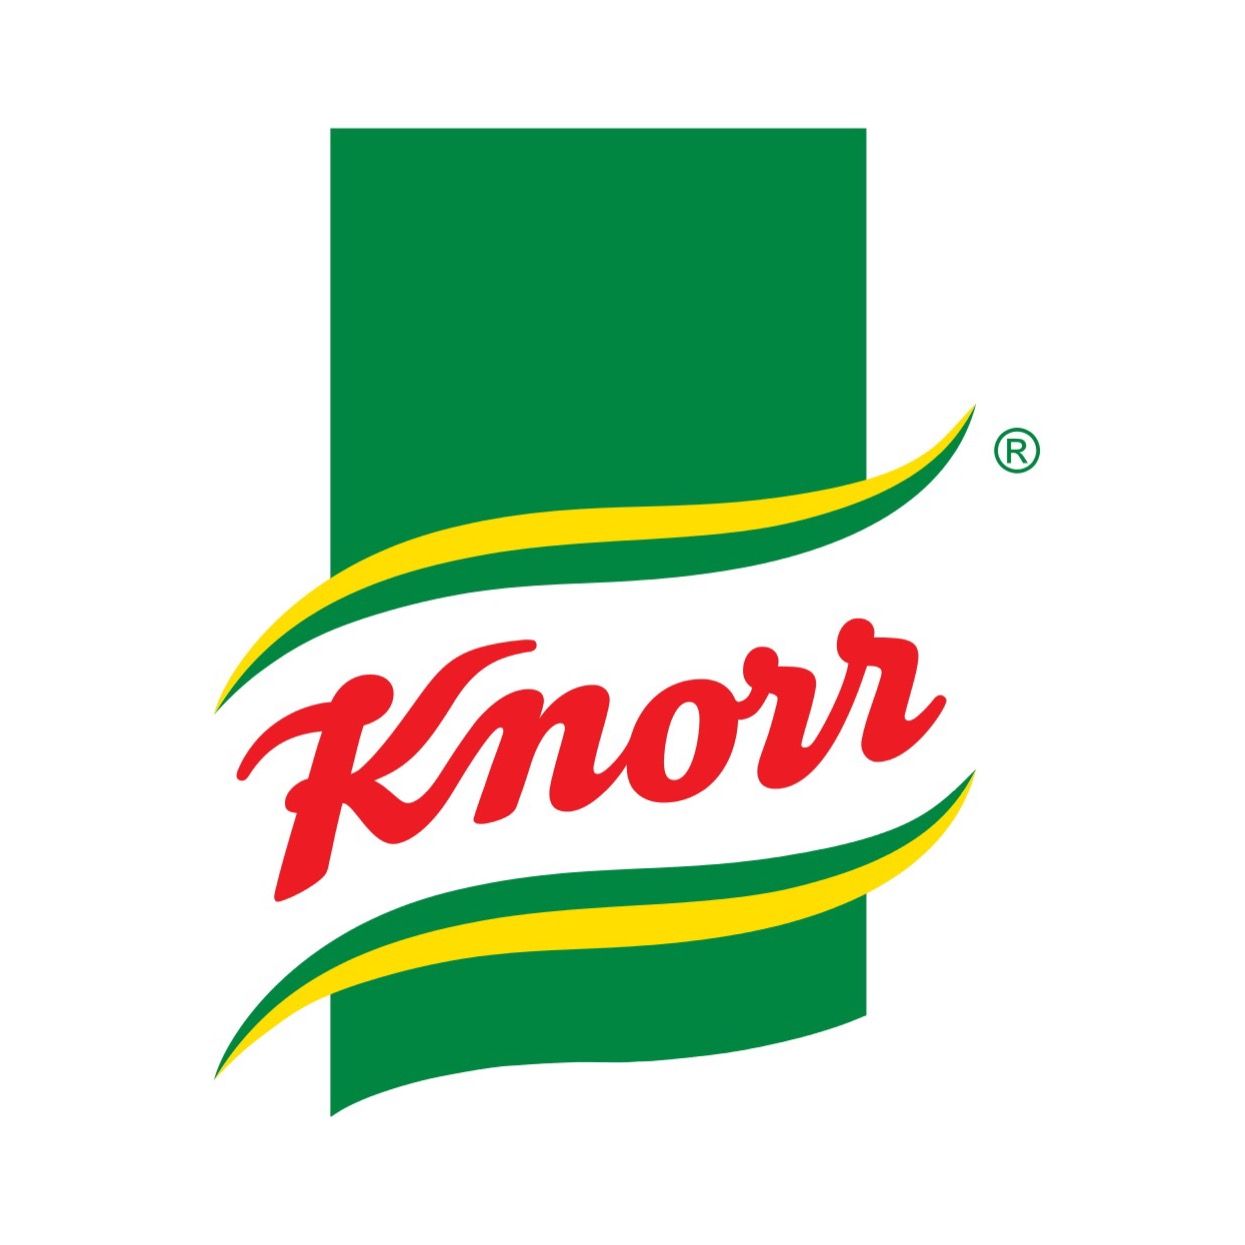 Knorr brand